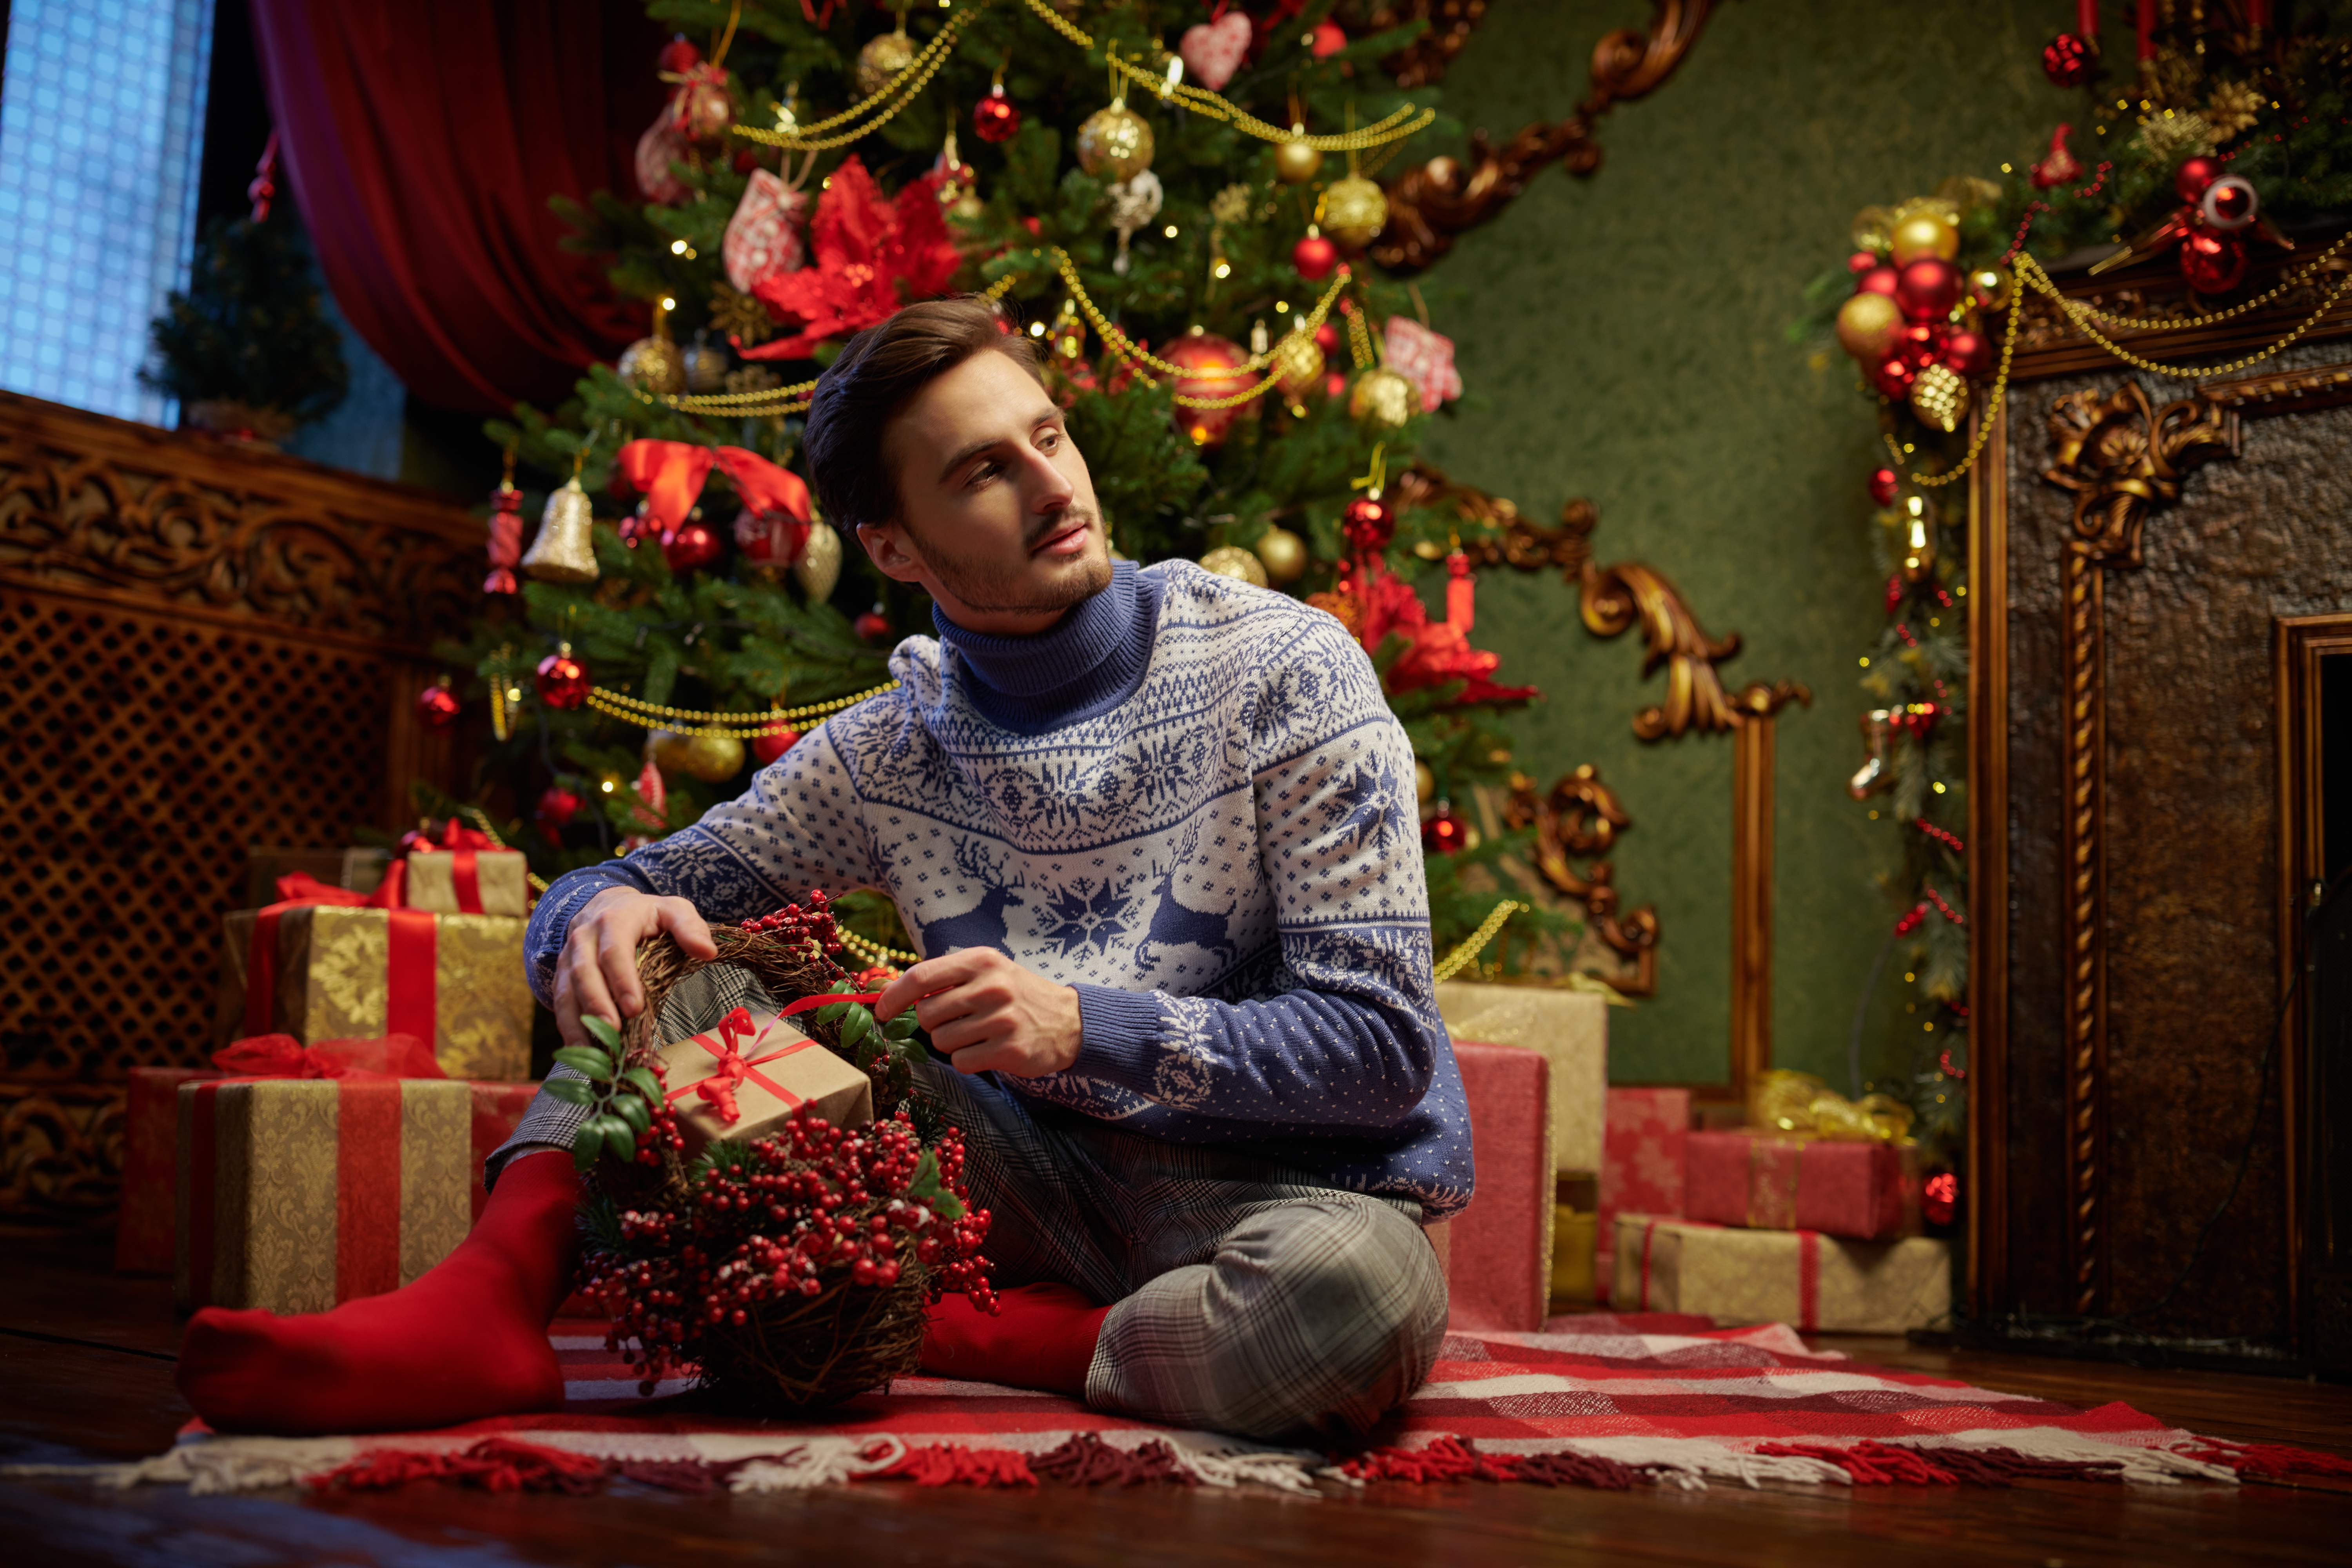 Un jeune ouvre un cadeau de Noël | Source : Shuttertsock